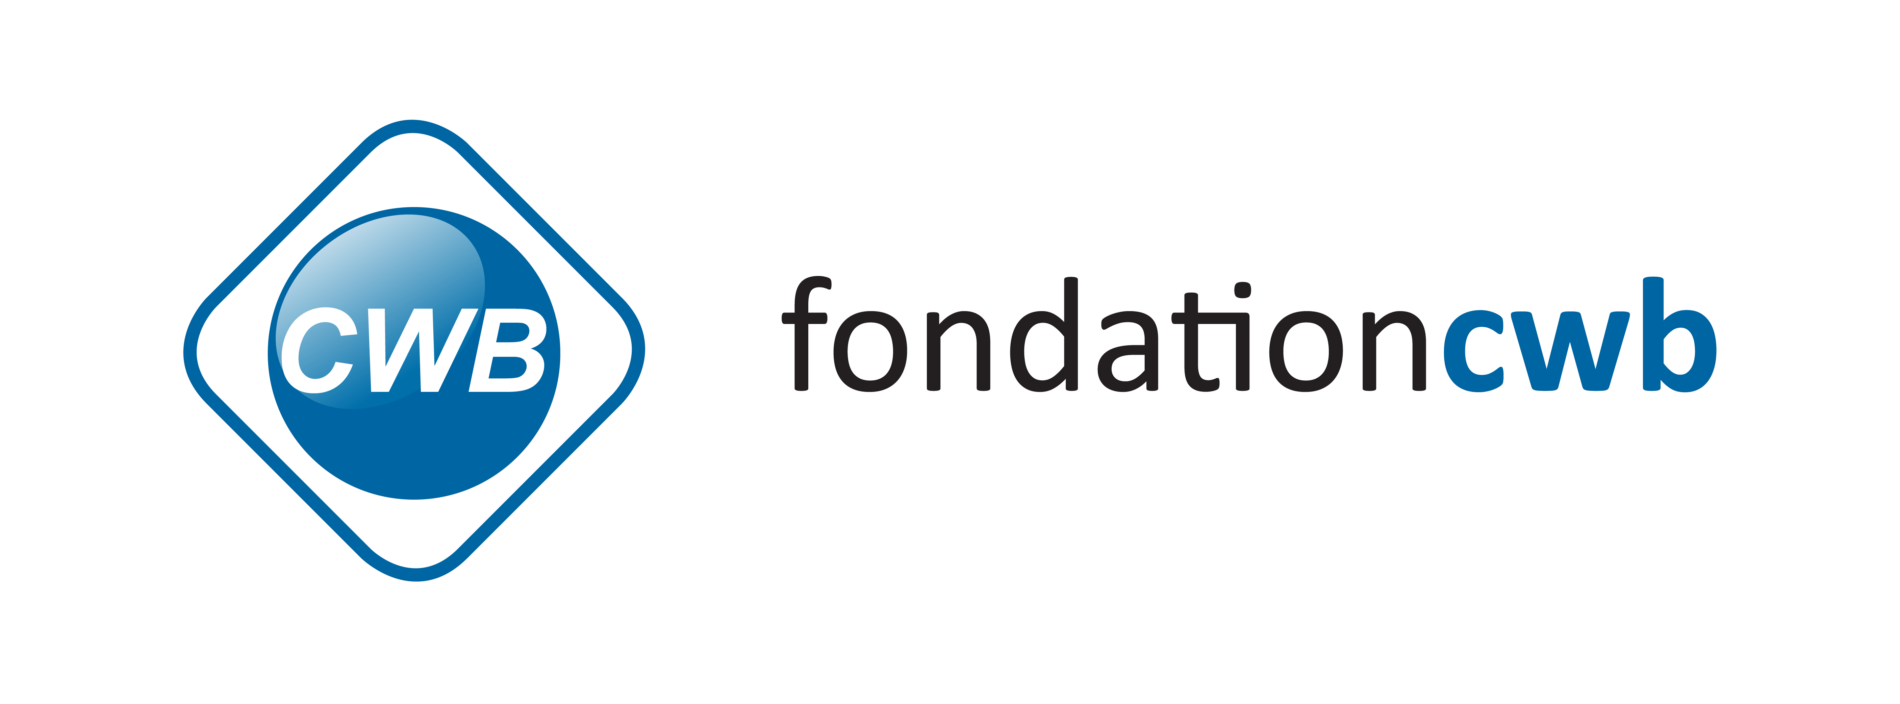 CWB fondation Logo